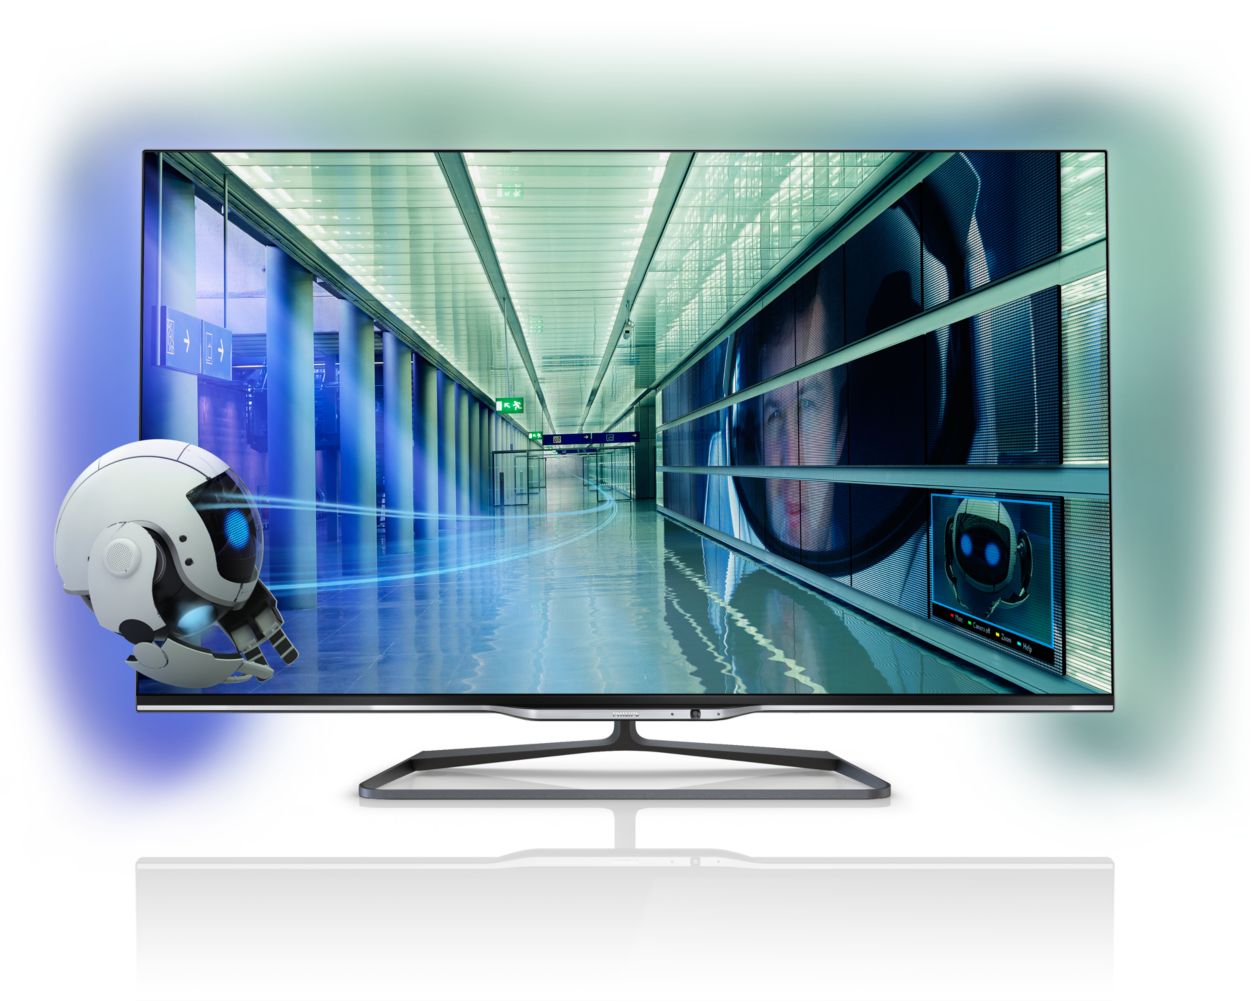 de ober frequentie Digitaal 7000 series Ultraslanke 3D Smart LED-TV 47PFL7008K/12 | Philips